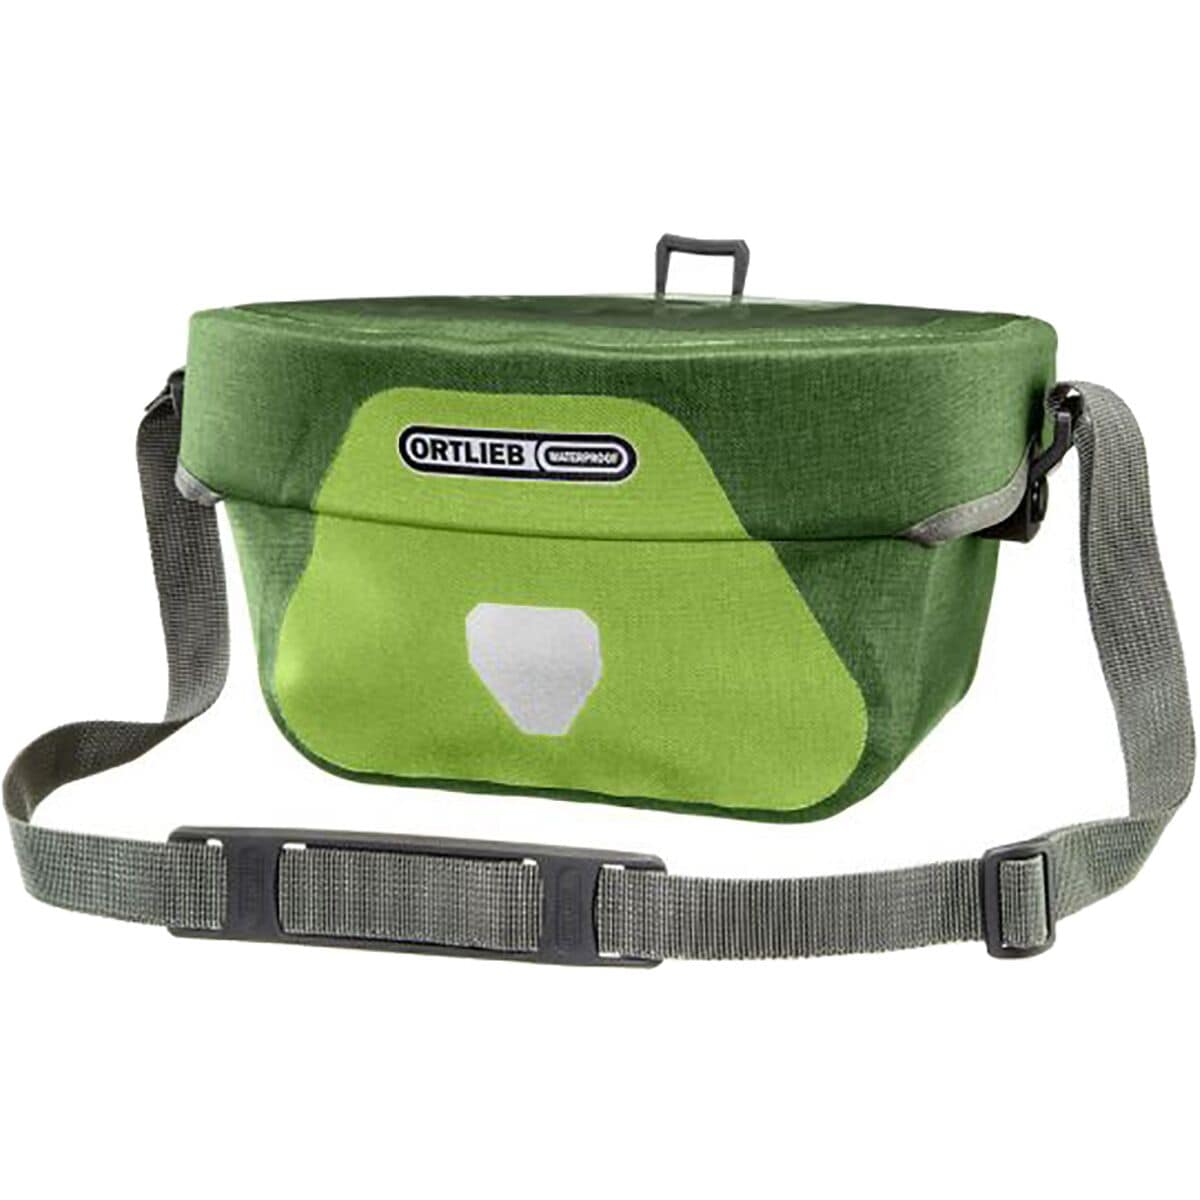 Ortlieb Ultimate 6 Plus 5-8.5L Handlebar Bag Kiwi/Moss Green, S, One